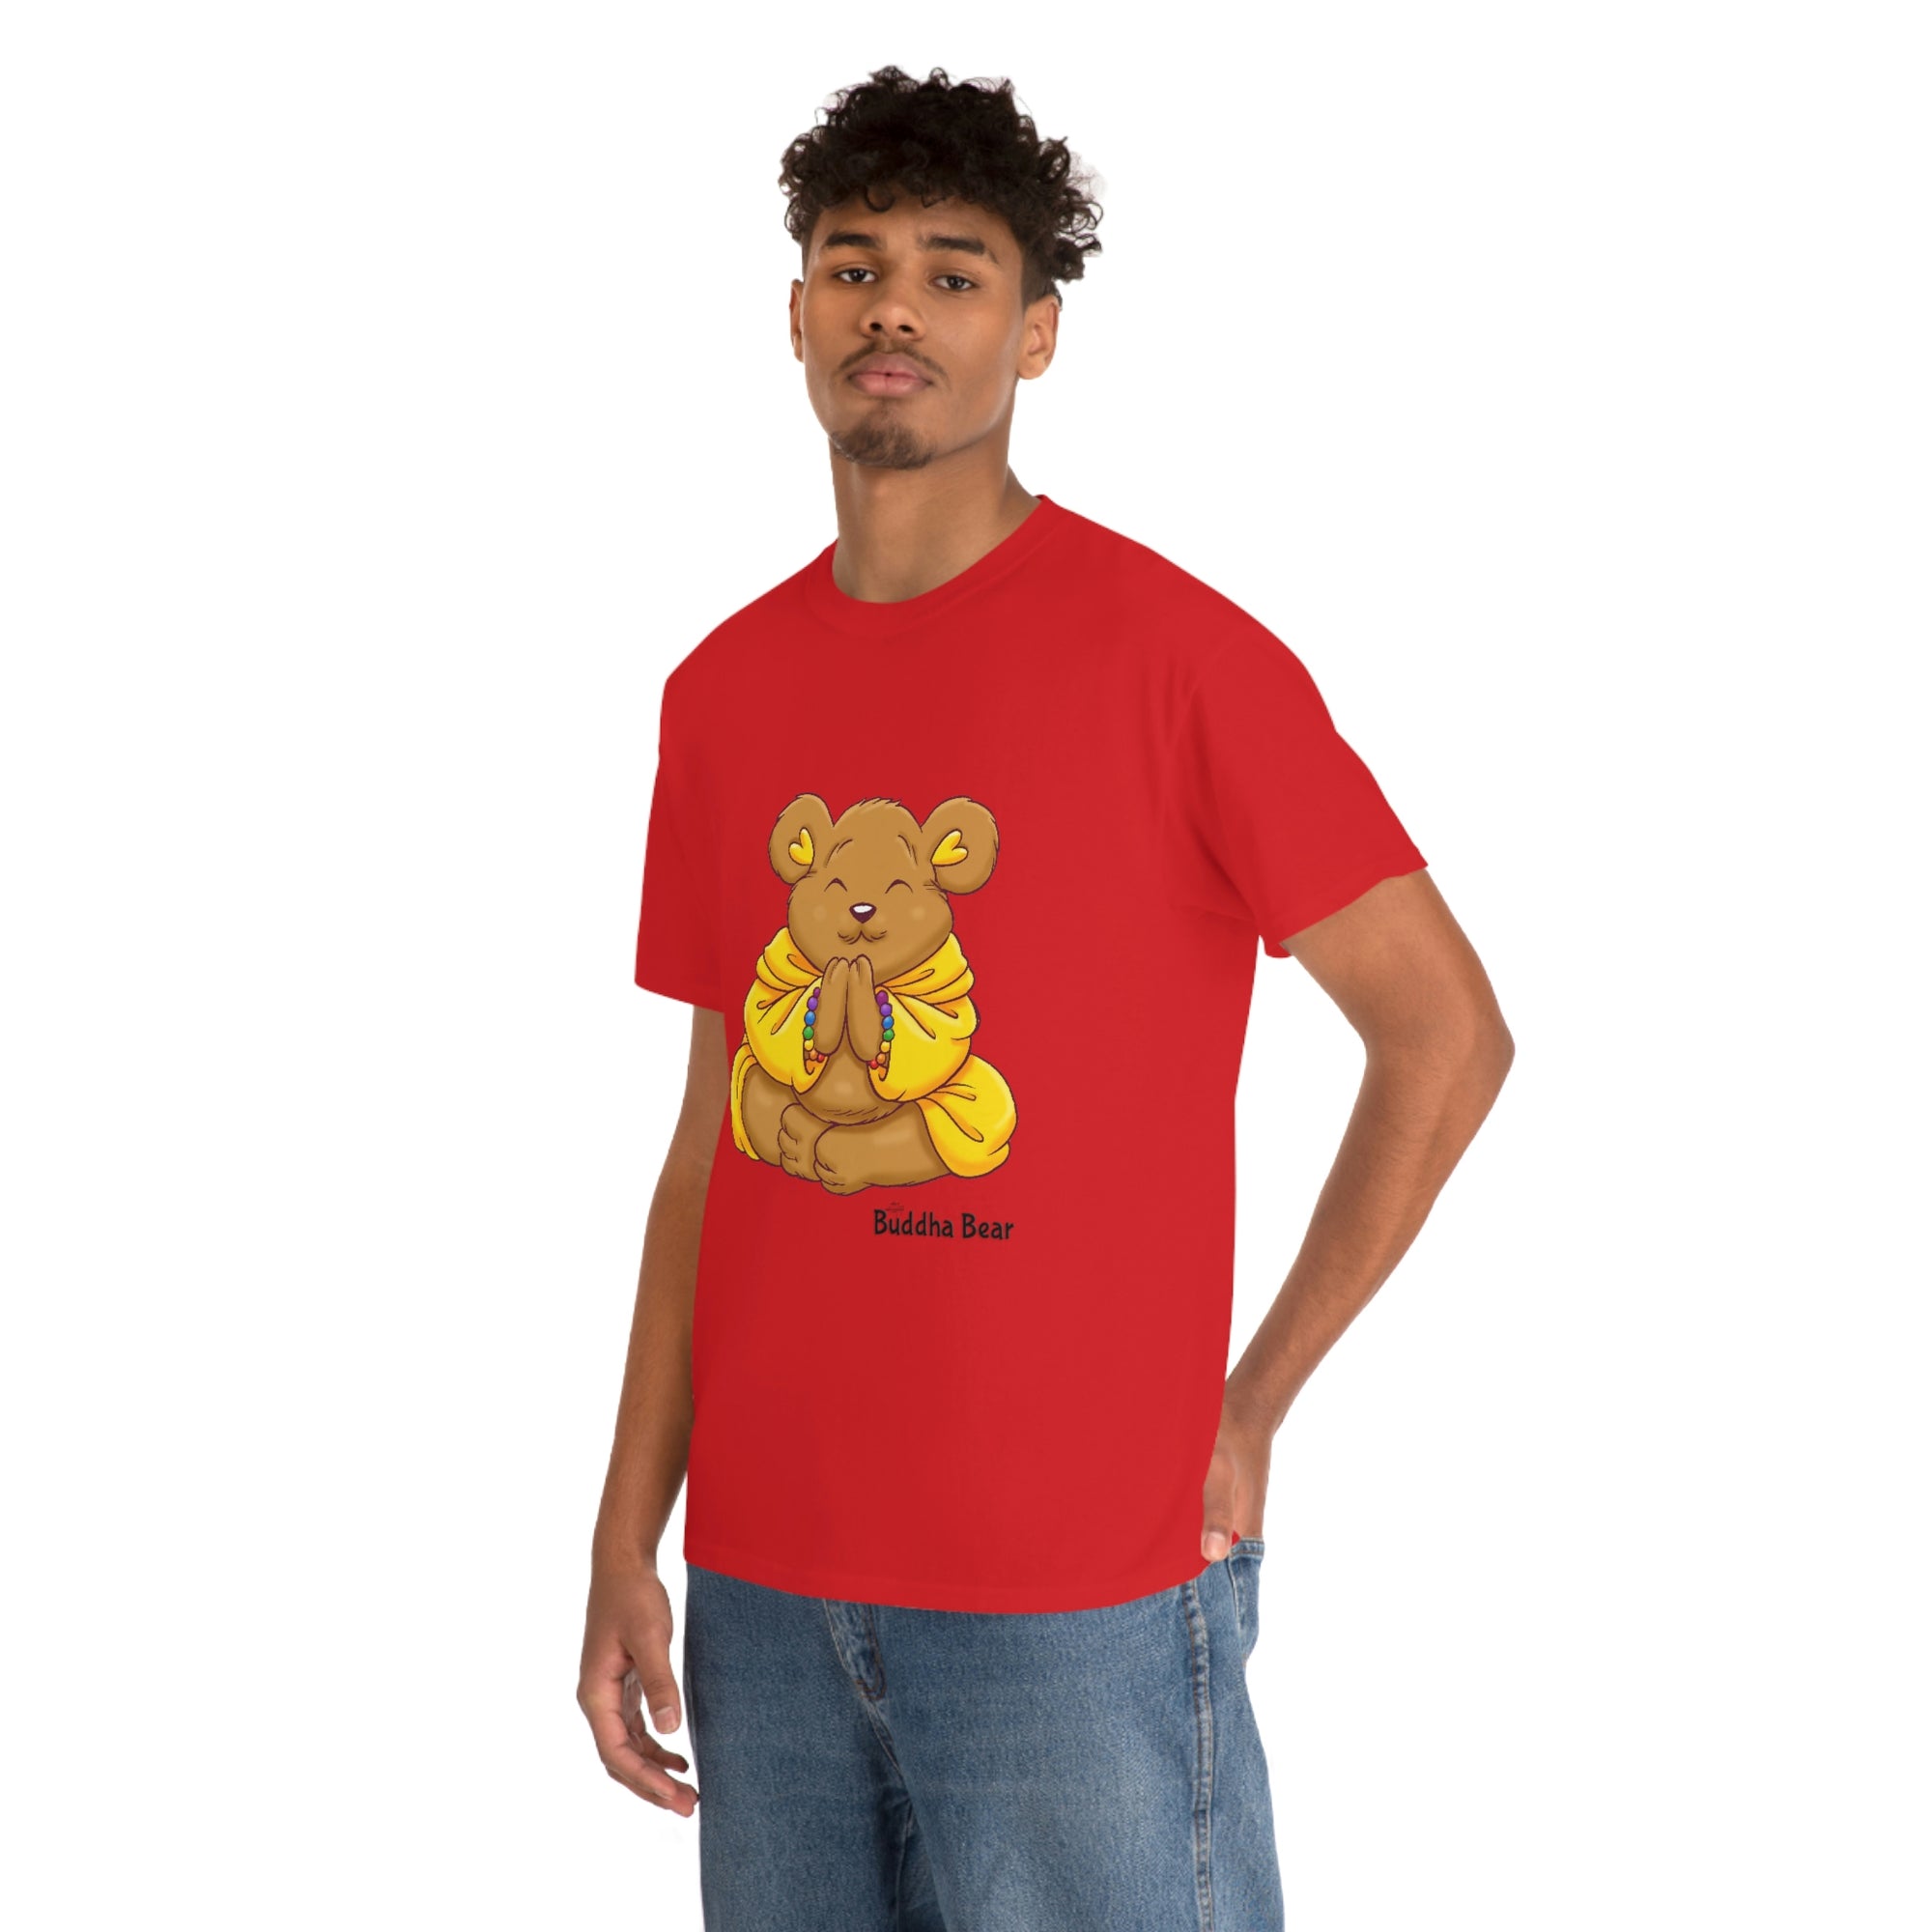 Buddha Bear's - Unisex T-shirt